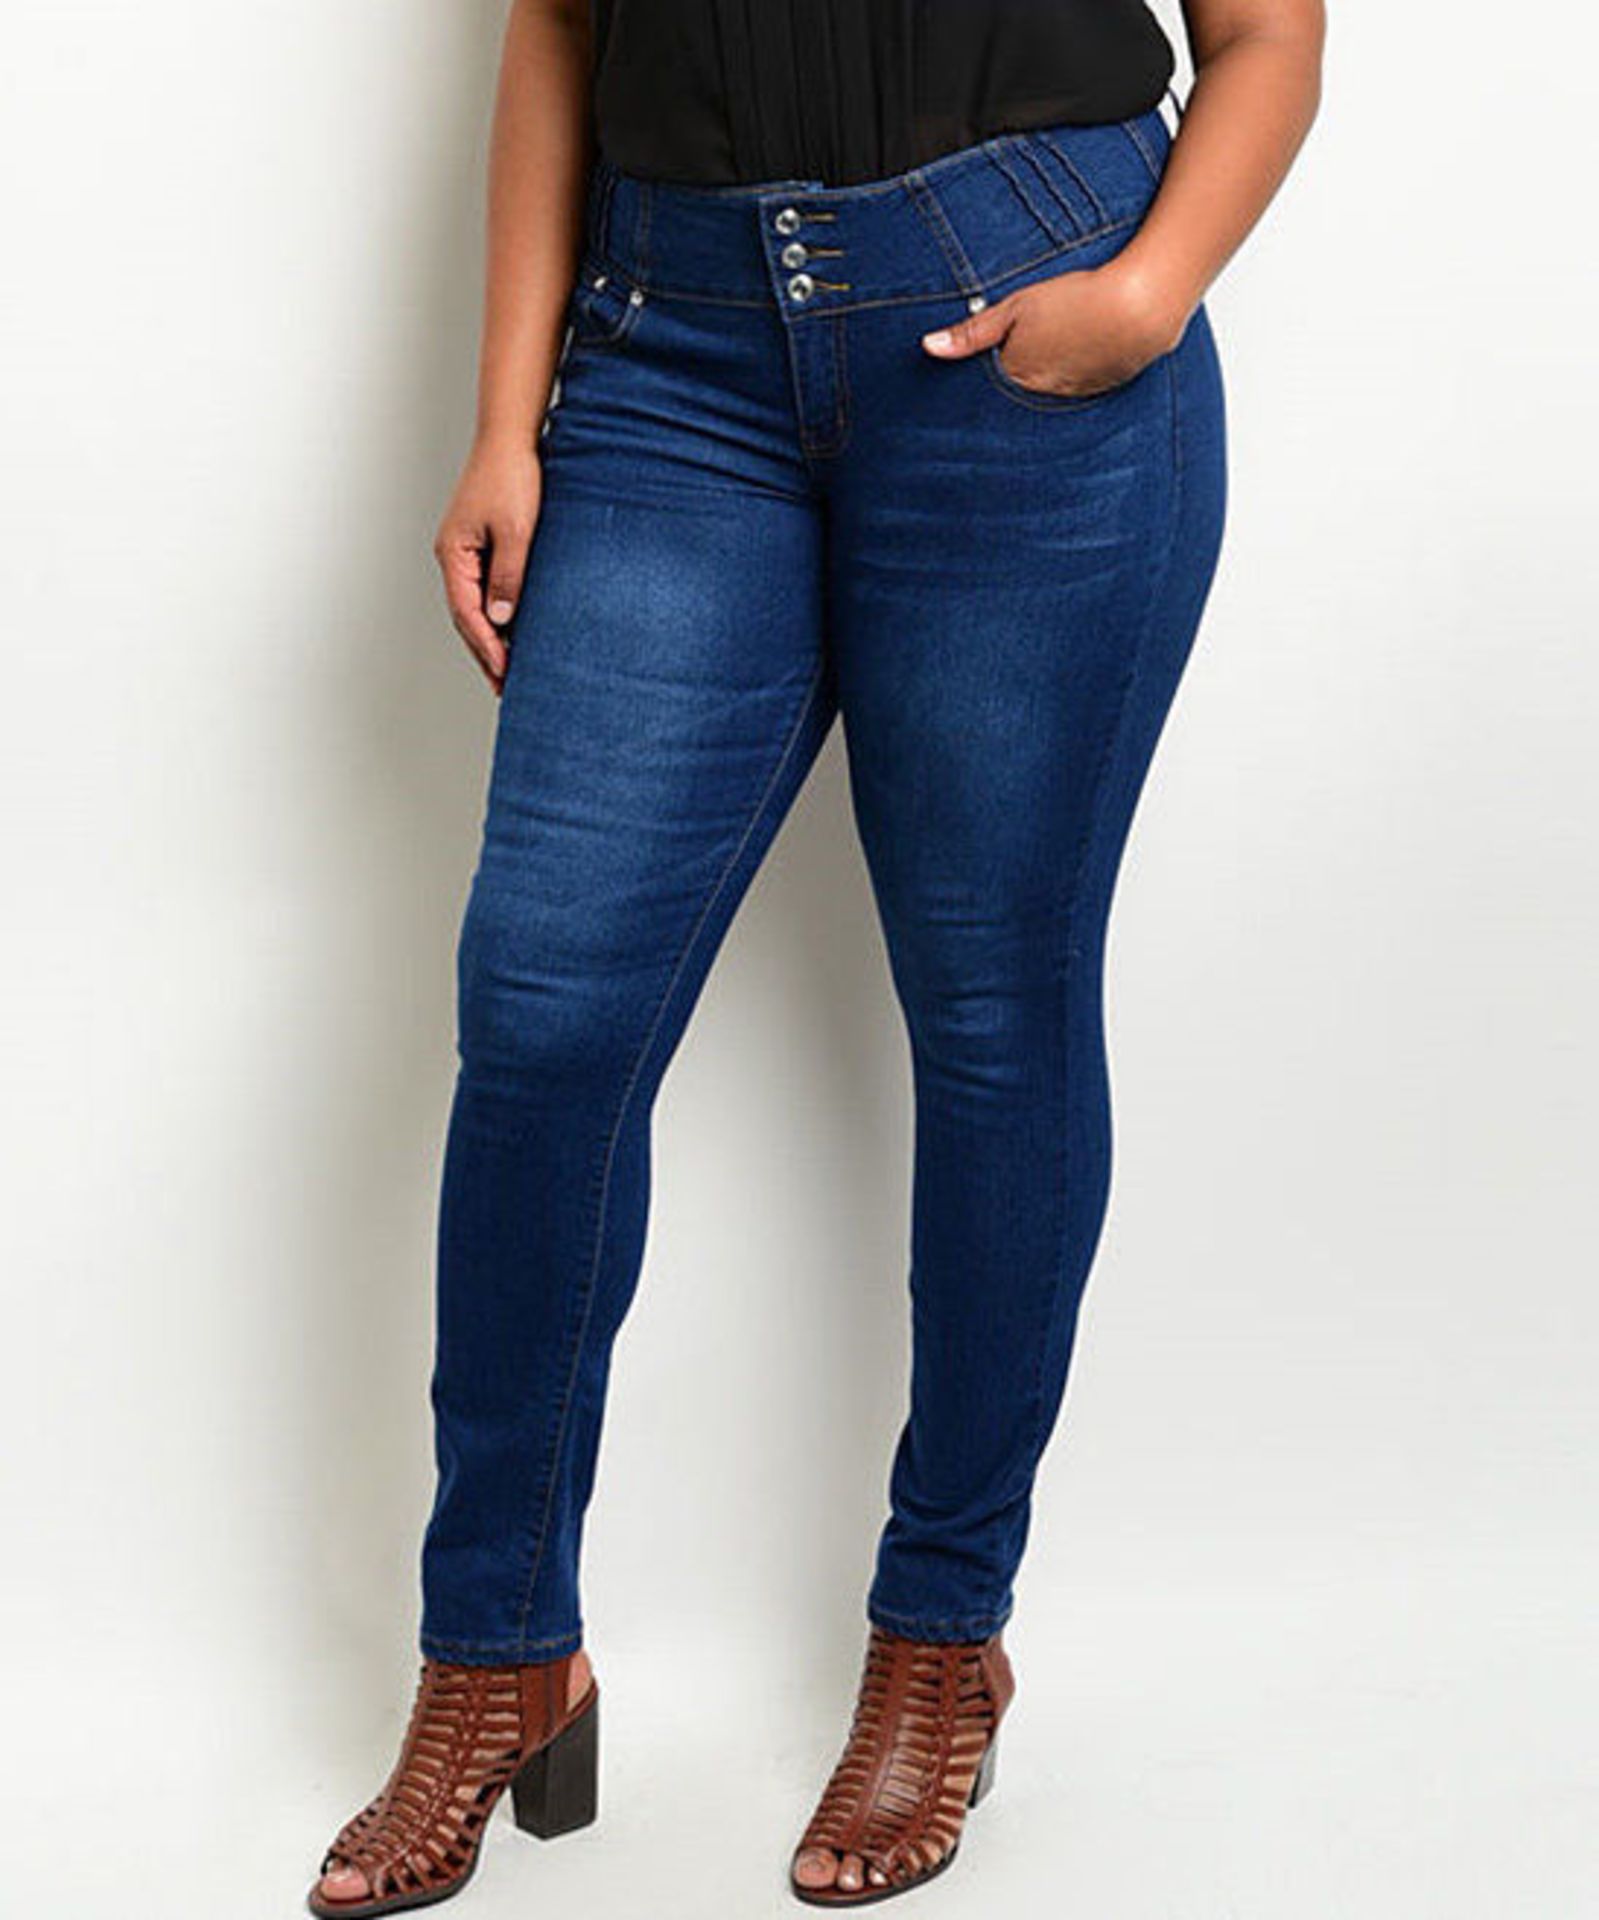 Ladies Designer Blue Denim Jeans (US 18/UK 22/EU 50) (New with tags) [Ref: 37751249- T-51] - Image 2 of 2